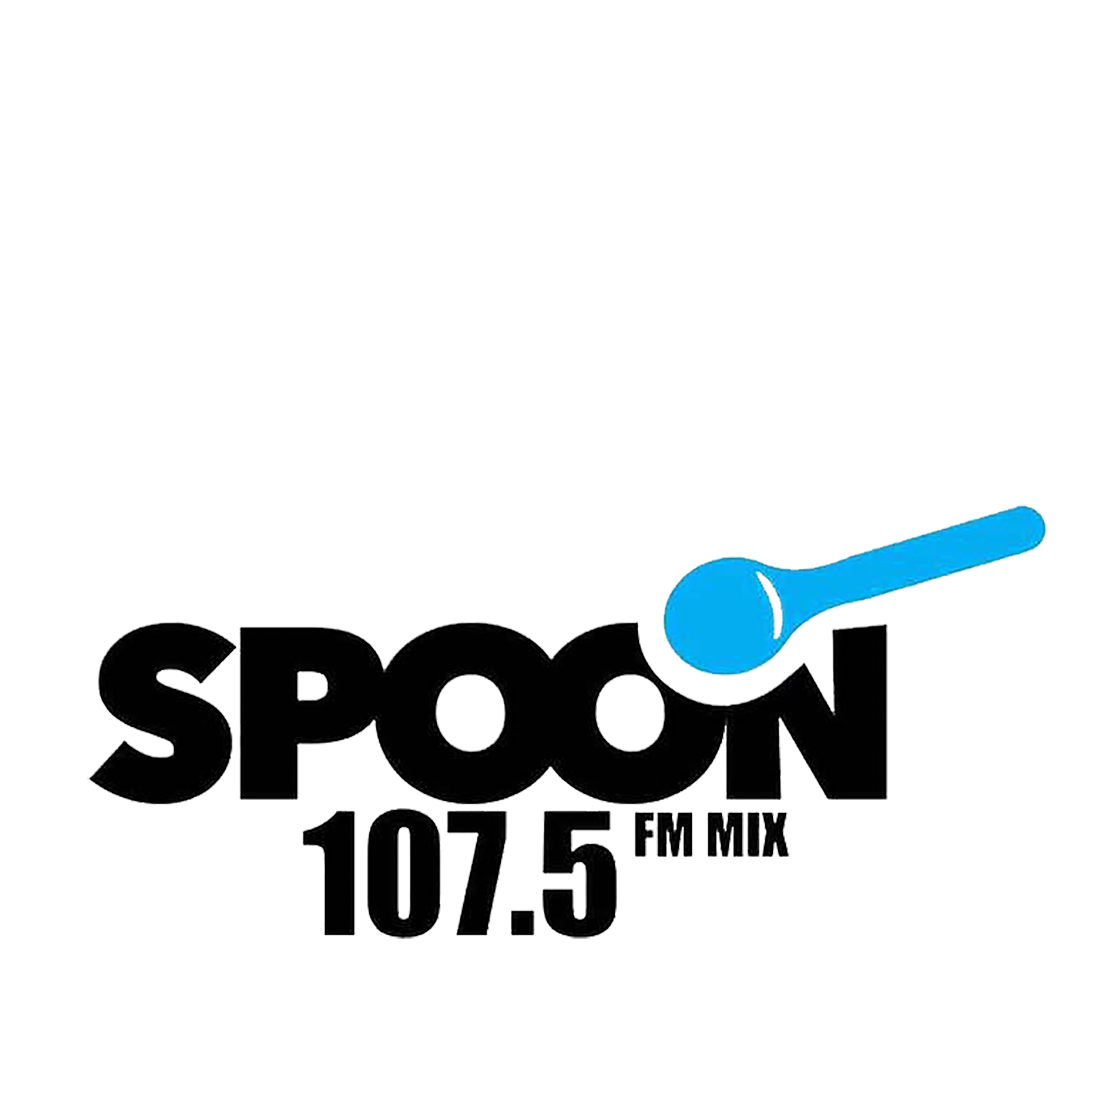 Spoon FM Monrovia